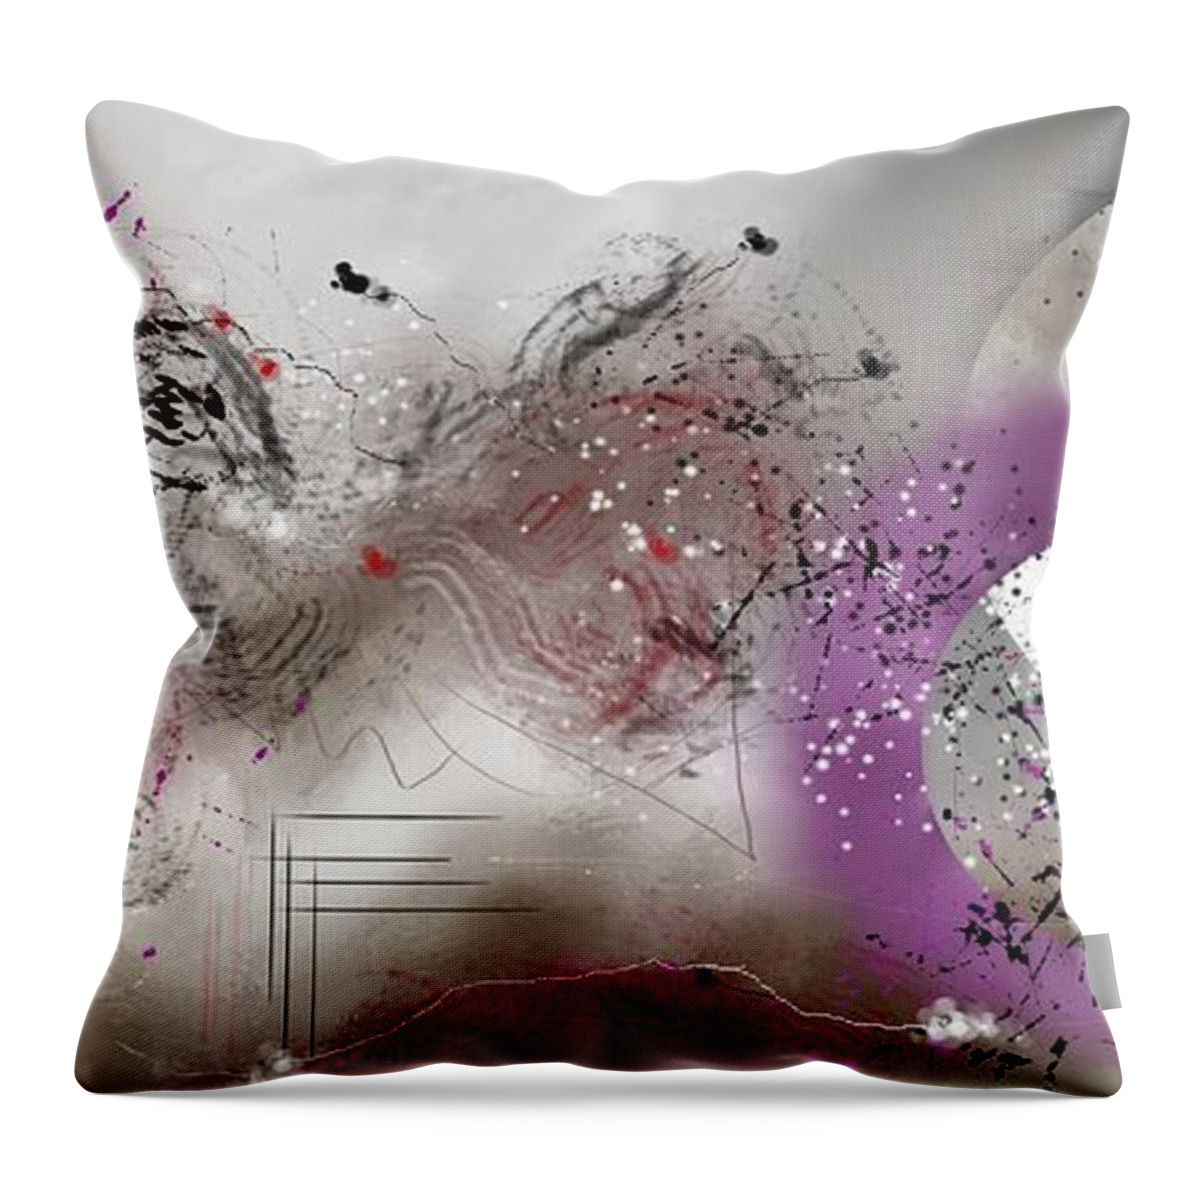 Cosmic Symphony Throw Pillow featuring the digital art Cosmic Symphony by Eduardo Tavares